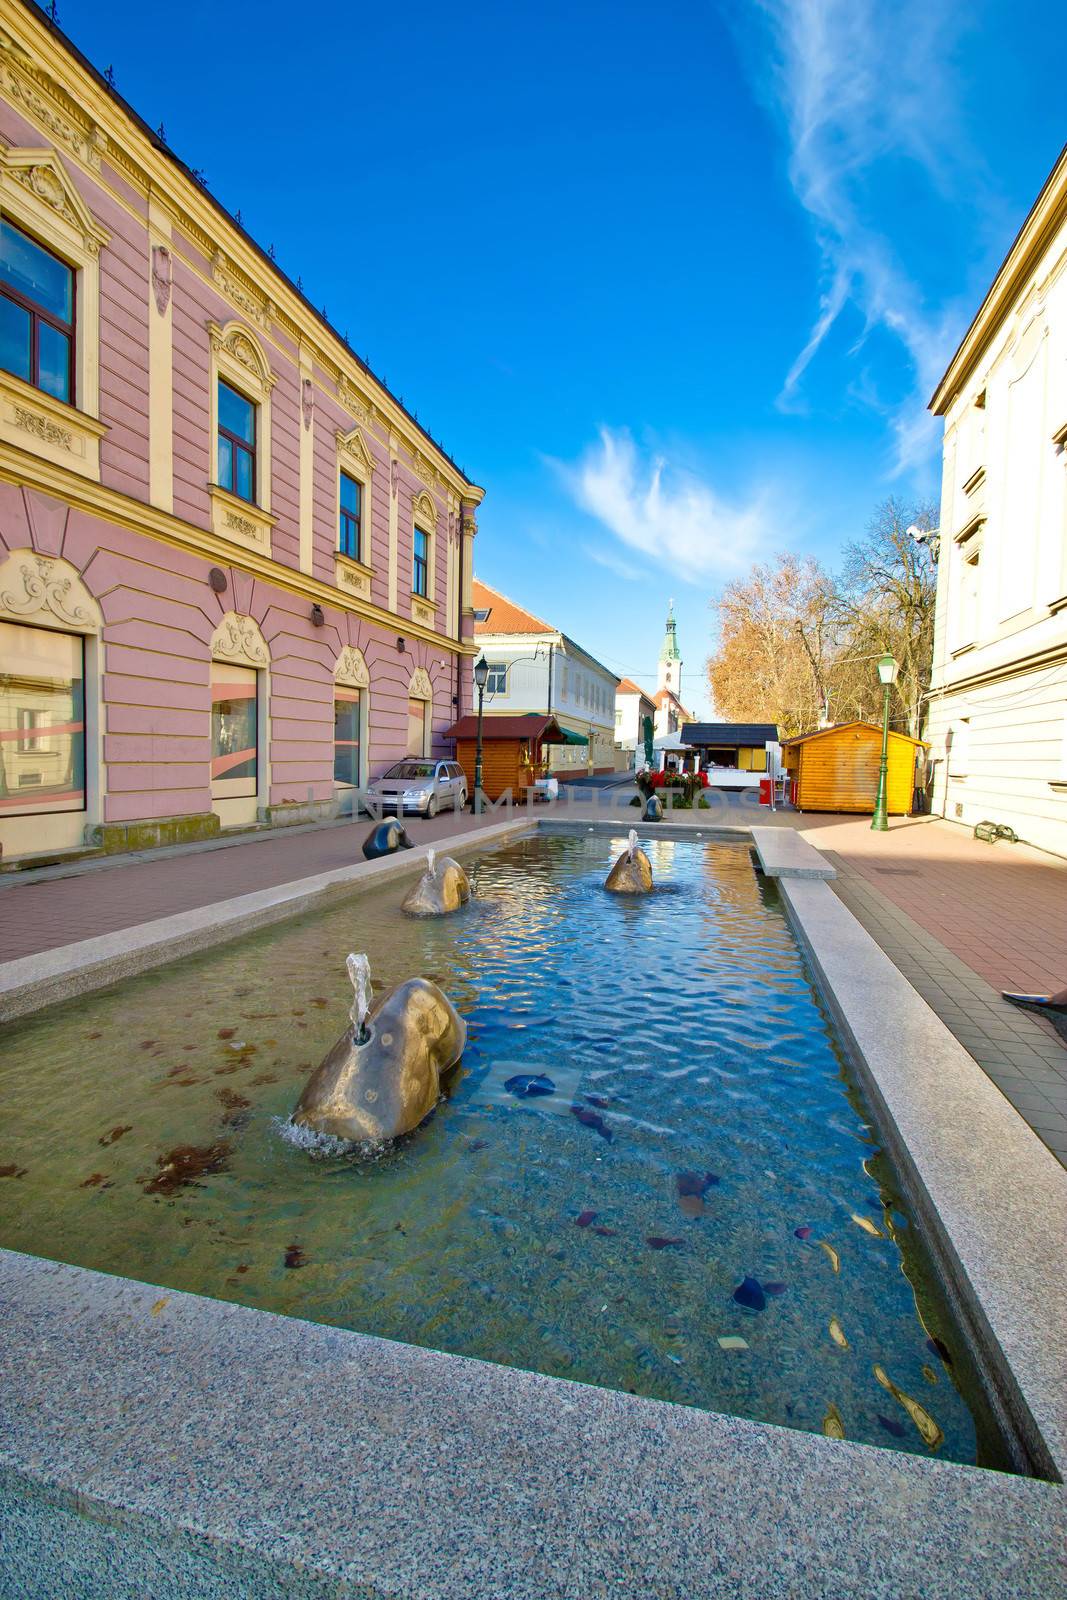 Town of Bjelovar square fountain, Bilogora, Croatia